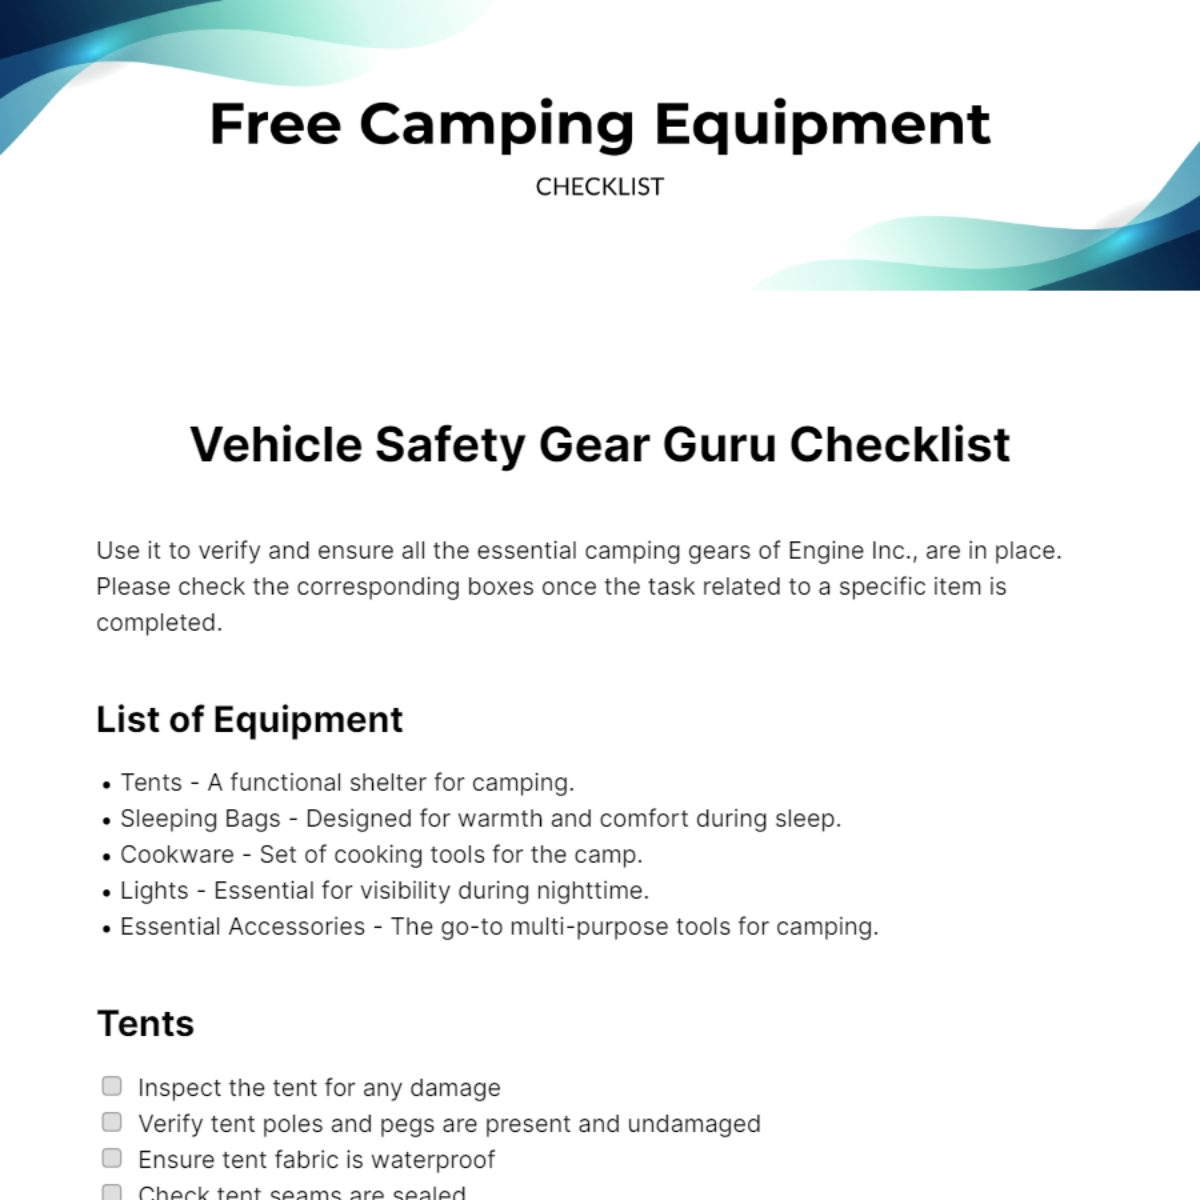 https://images.template.net/286294/Camping-Equipment-Checklist-Template-edit-online-2.jpg